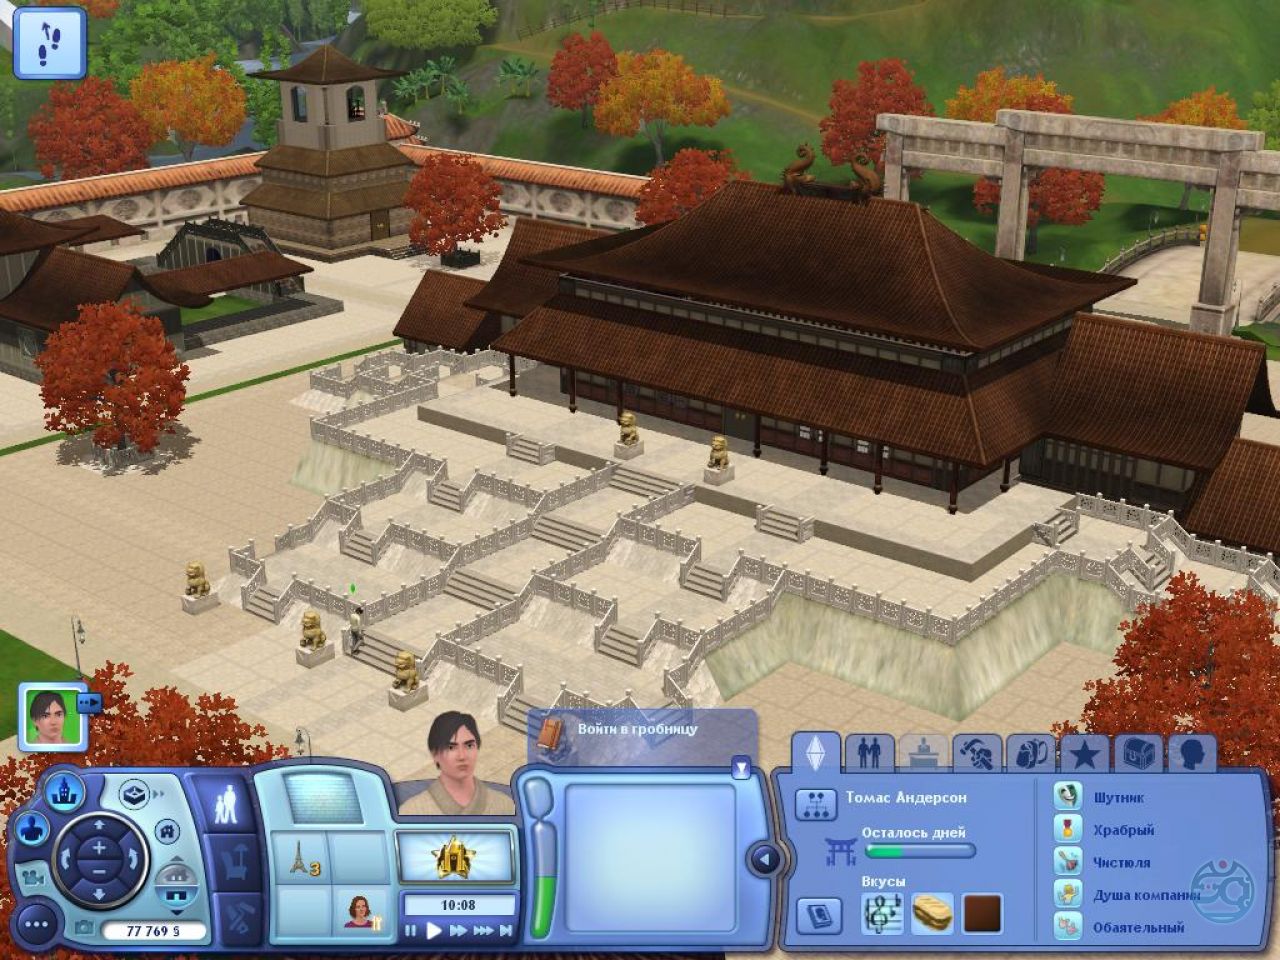 Sims 3 worlds. SIMS 3 World Adventures. Симс 3 Китай. Симс 3 мир приключений Китай. Симс 3 путешествия.